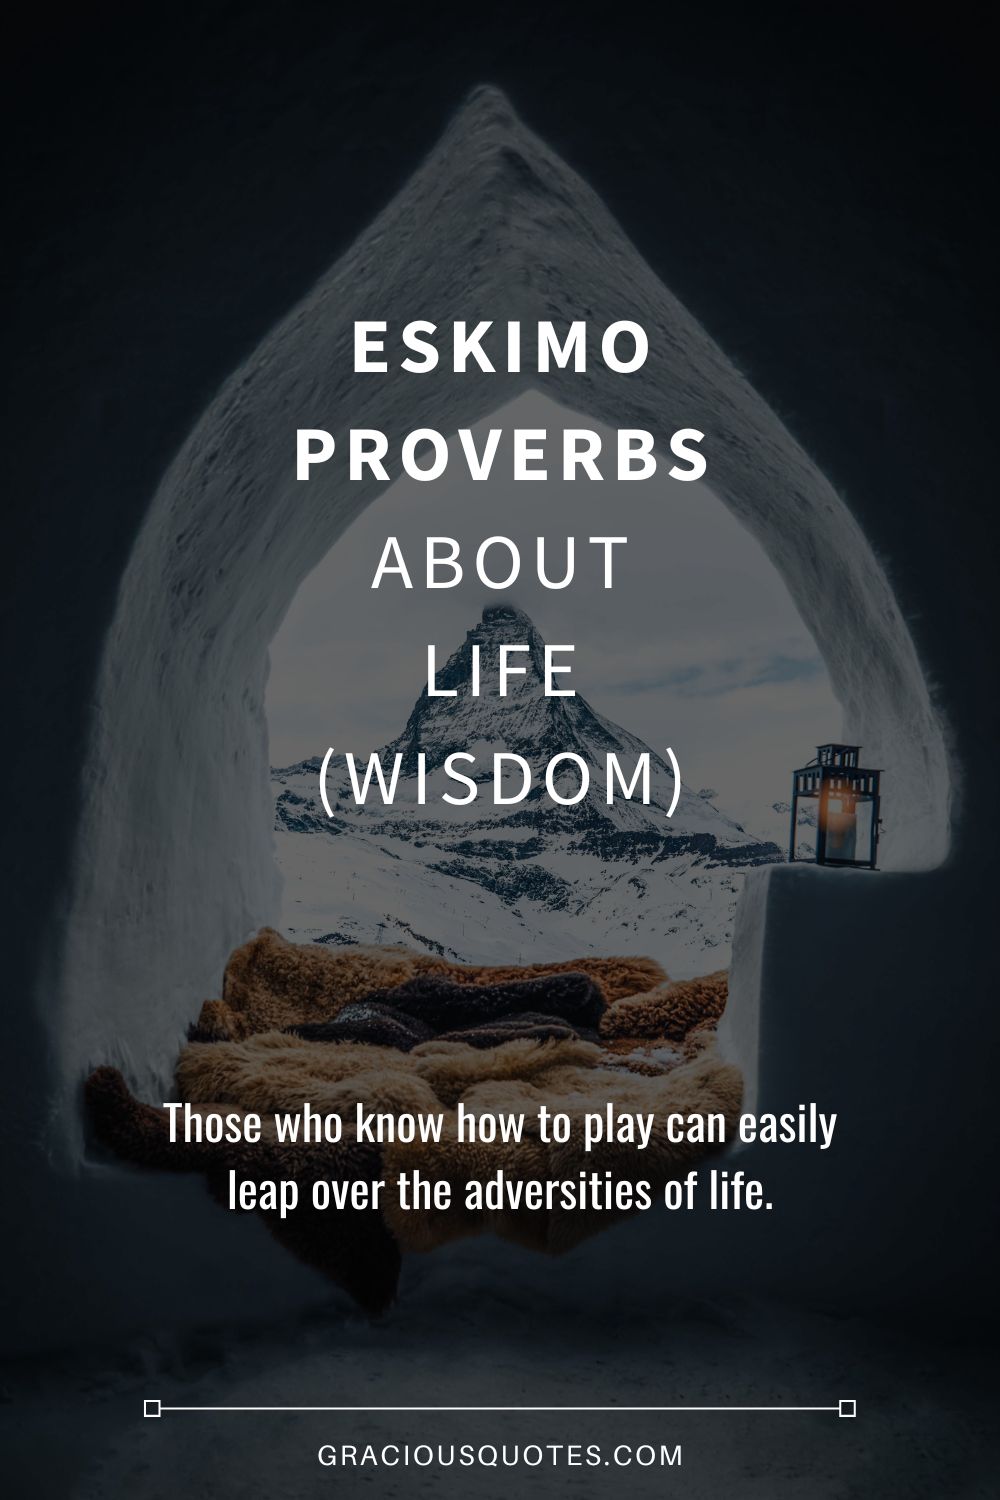 Eskimo Proverbs About Life (WISDOM) - Gracious Quotes